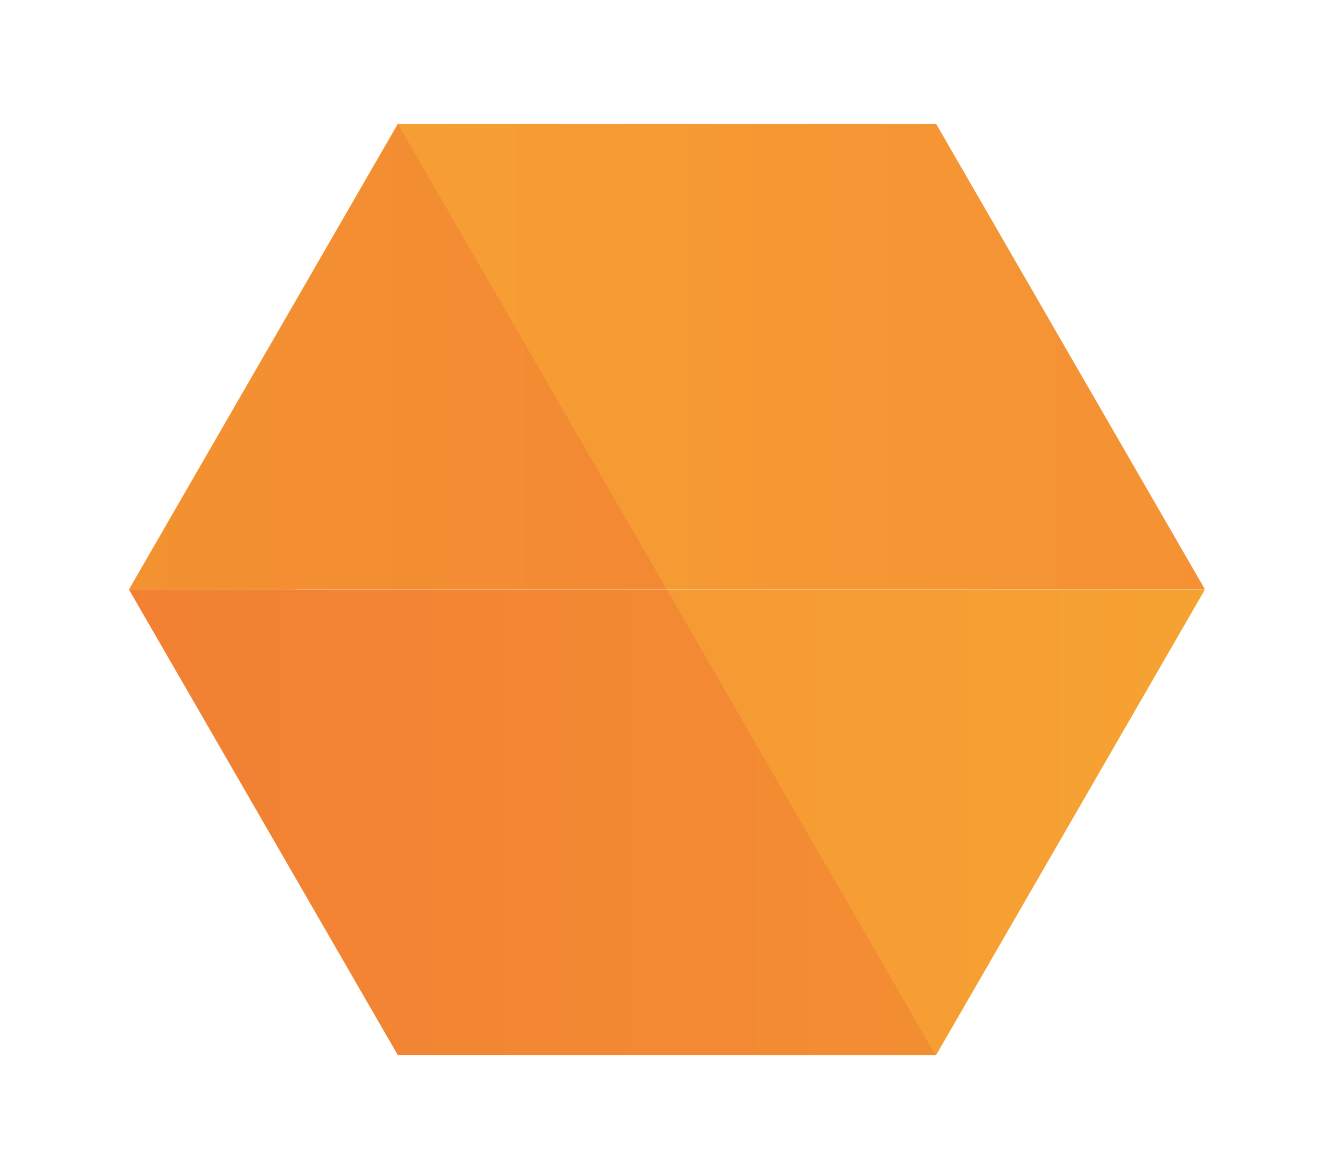 Hexagon clipart orange.